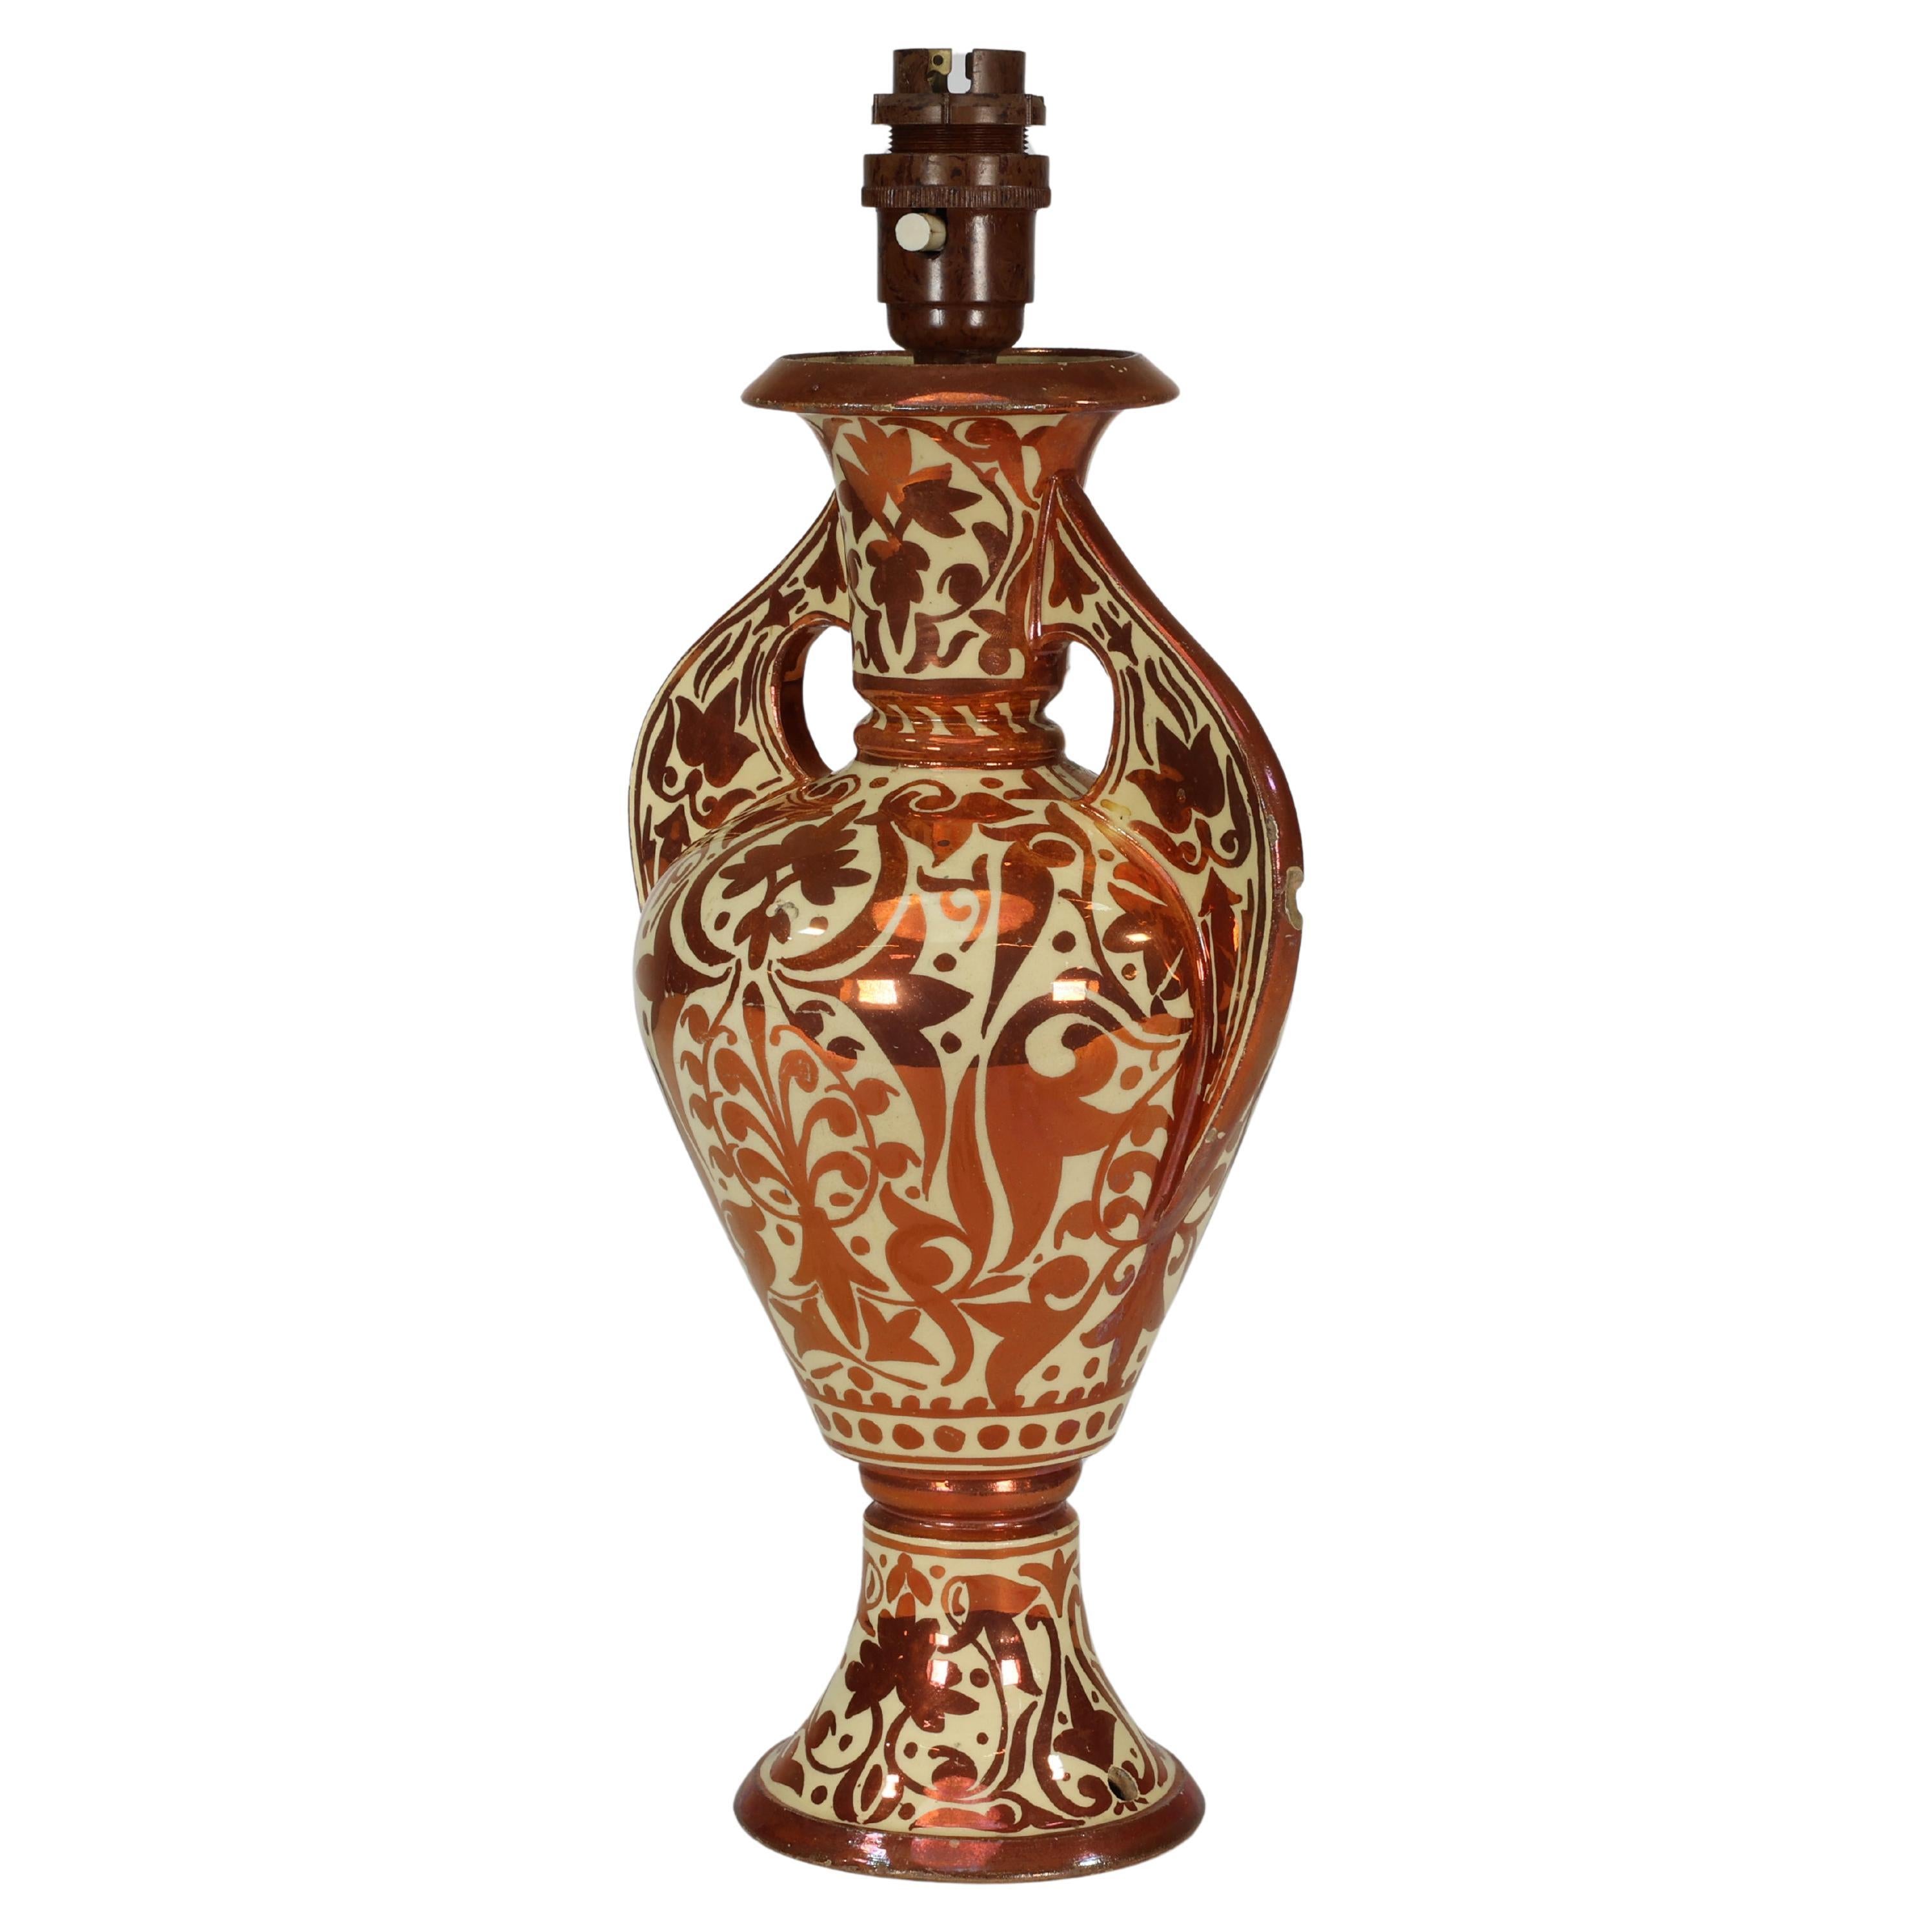 Cantagalli Italian porcelain copper lustre vase converted into a table lamp.